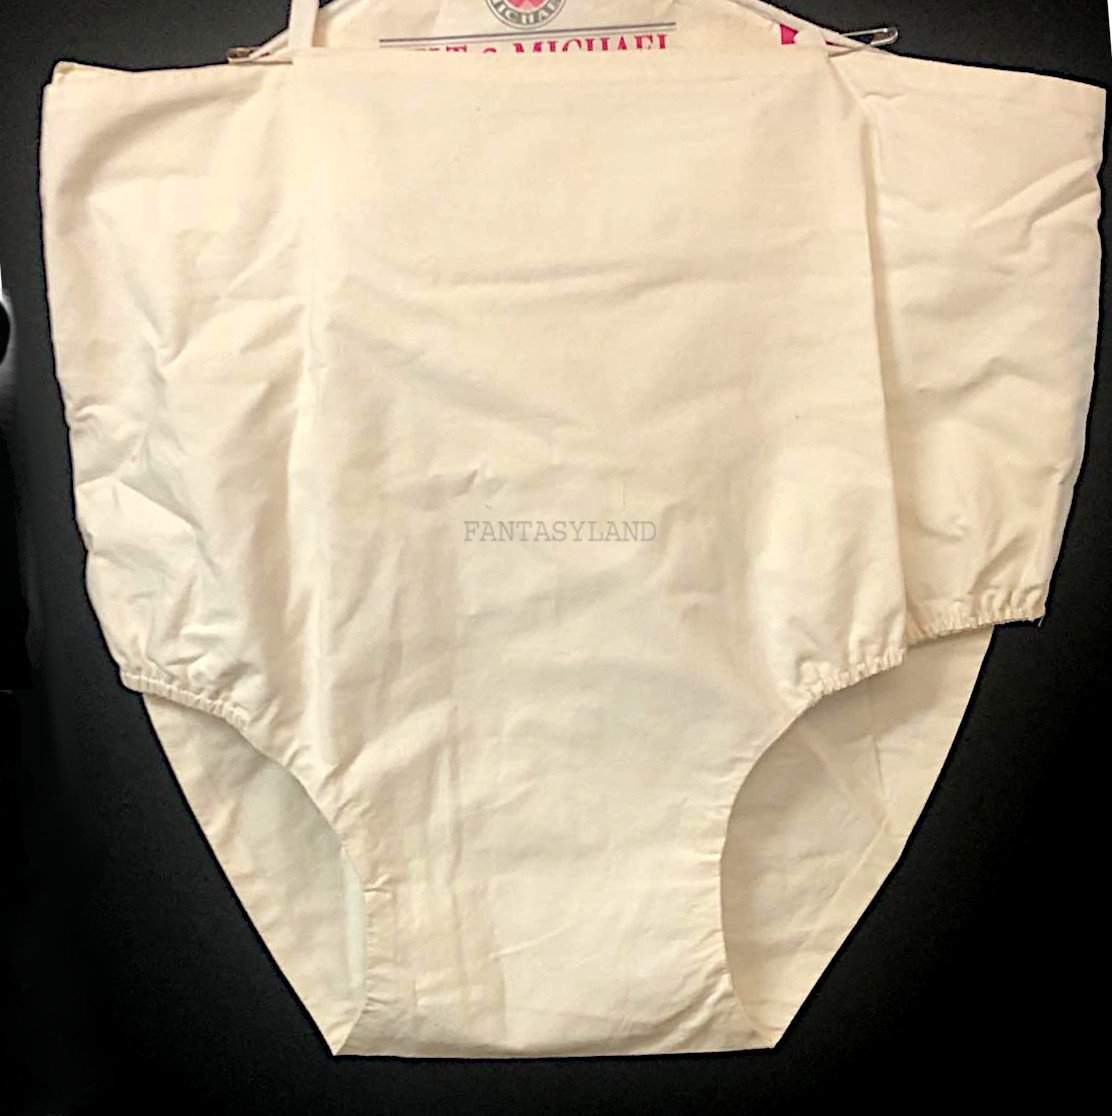 Baby Costume with Diaper Size XXXL